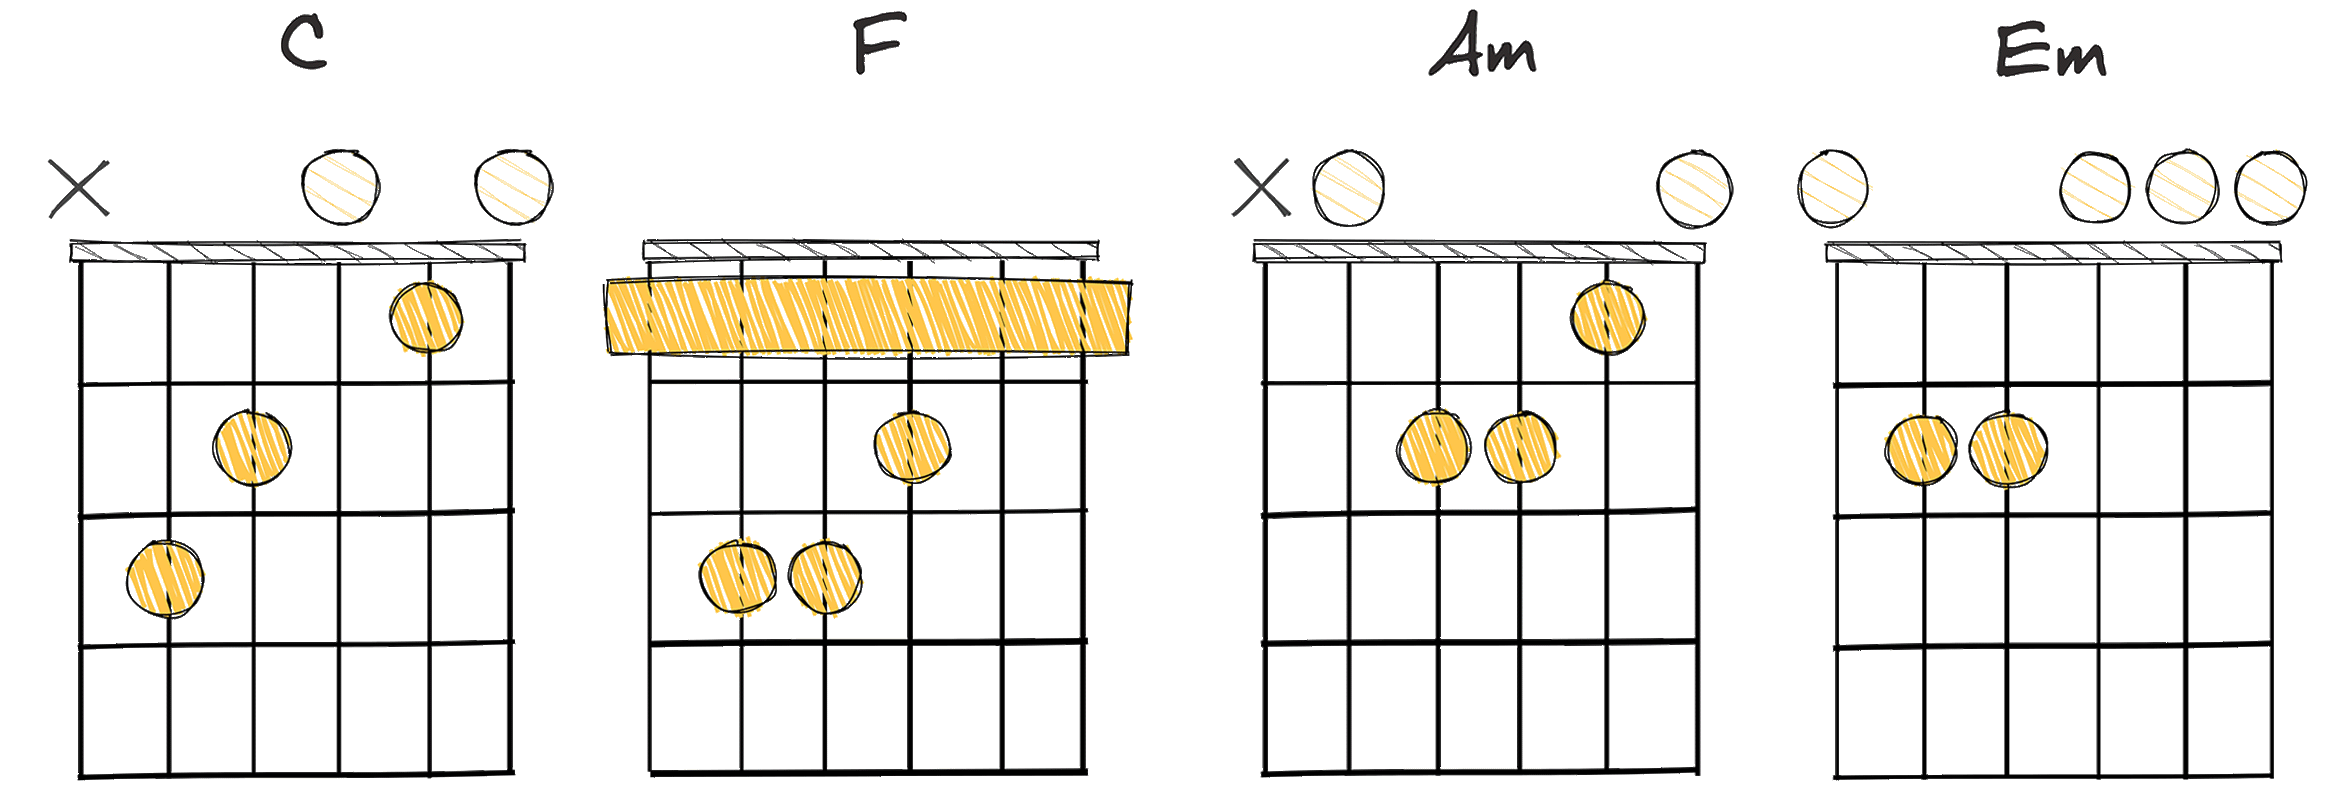 I-IV-vi-iii (1-4-6-3) chords diagram